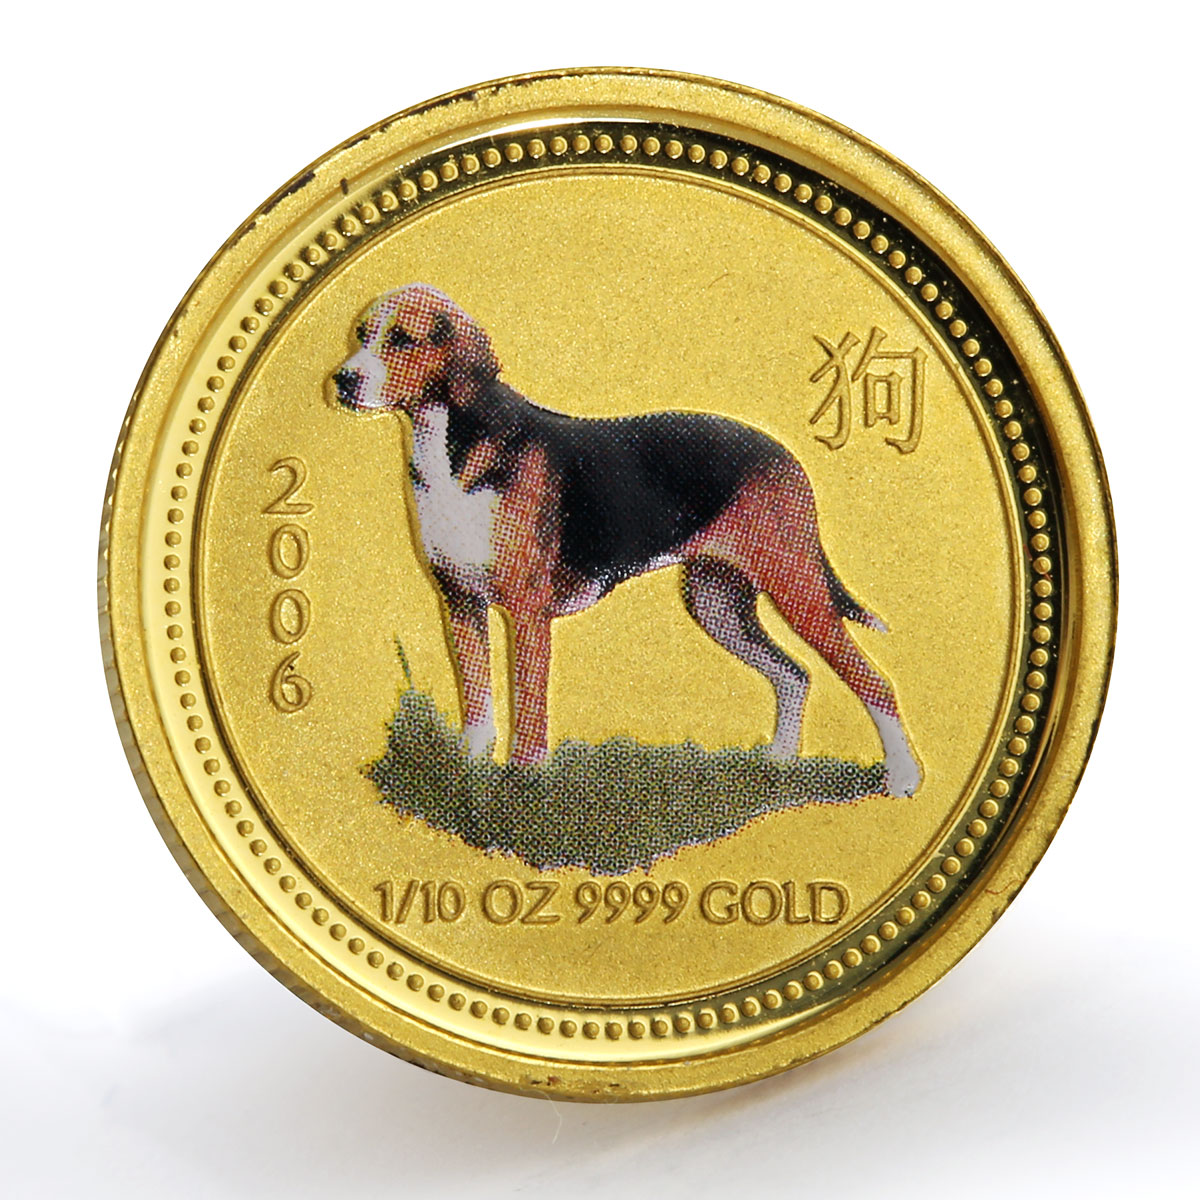 Australia 15 dollars Lunar calendar Year of Dog colored gold coin 1/10 oz 2006